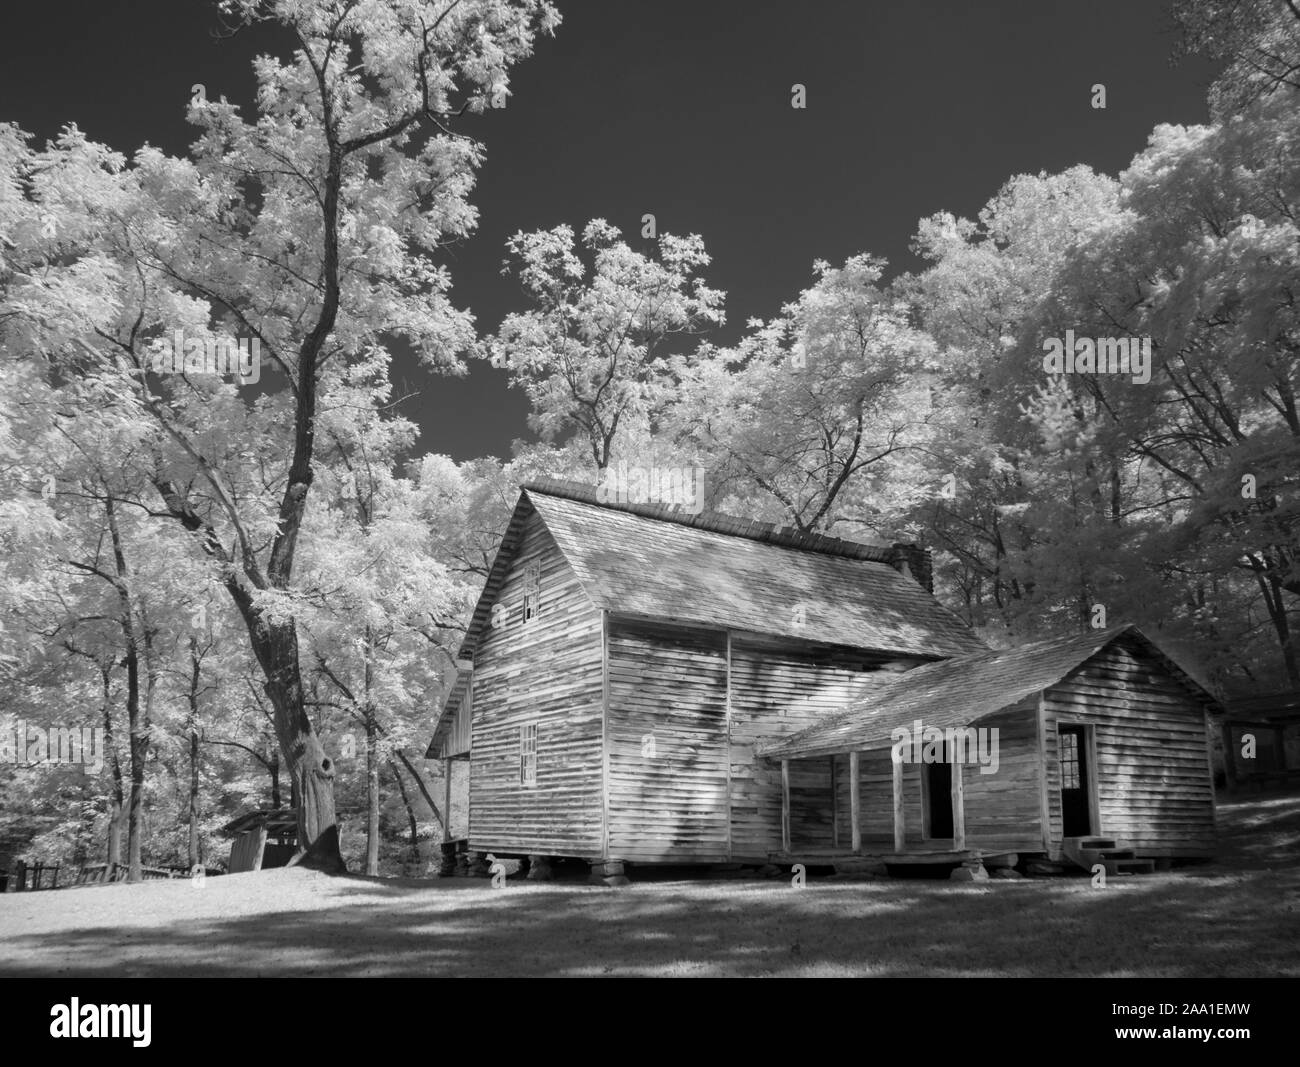 Infrarot rot false Schwarz b&w Fotografie von Tipton Haus in Cades Cove der Great Smoky Mountains National Park in Tennessee Stockfoto